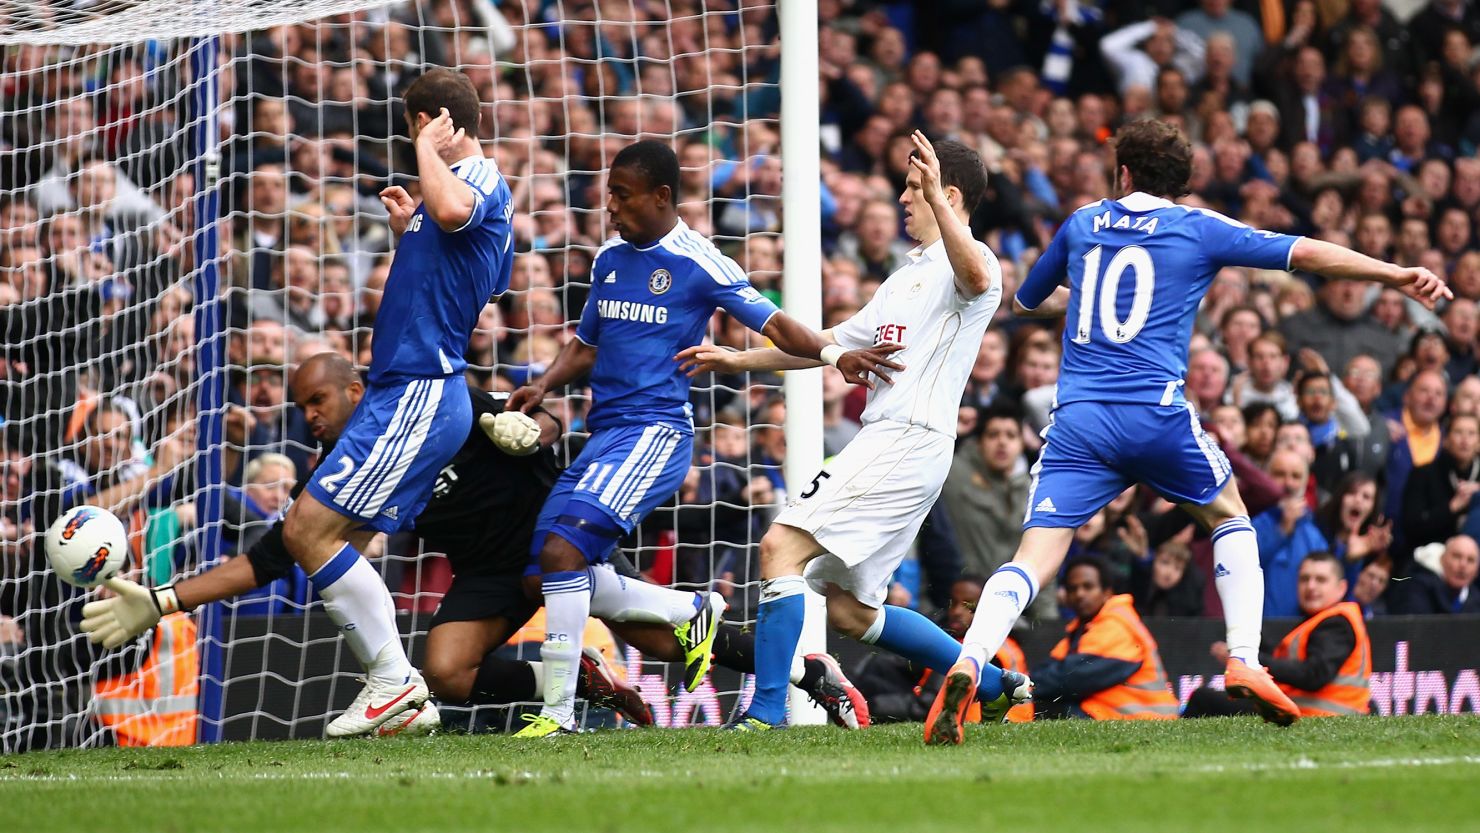 Juan Mata (No.10) scores Chelsea's winning goal against Wigan at Stamford Bridge on Saturday